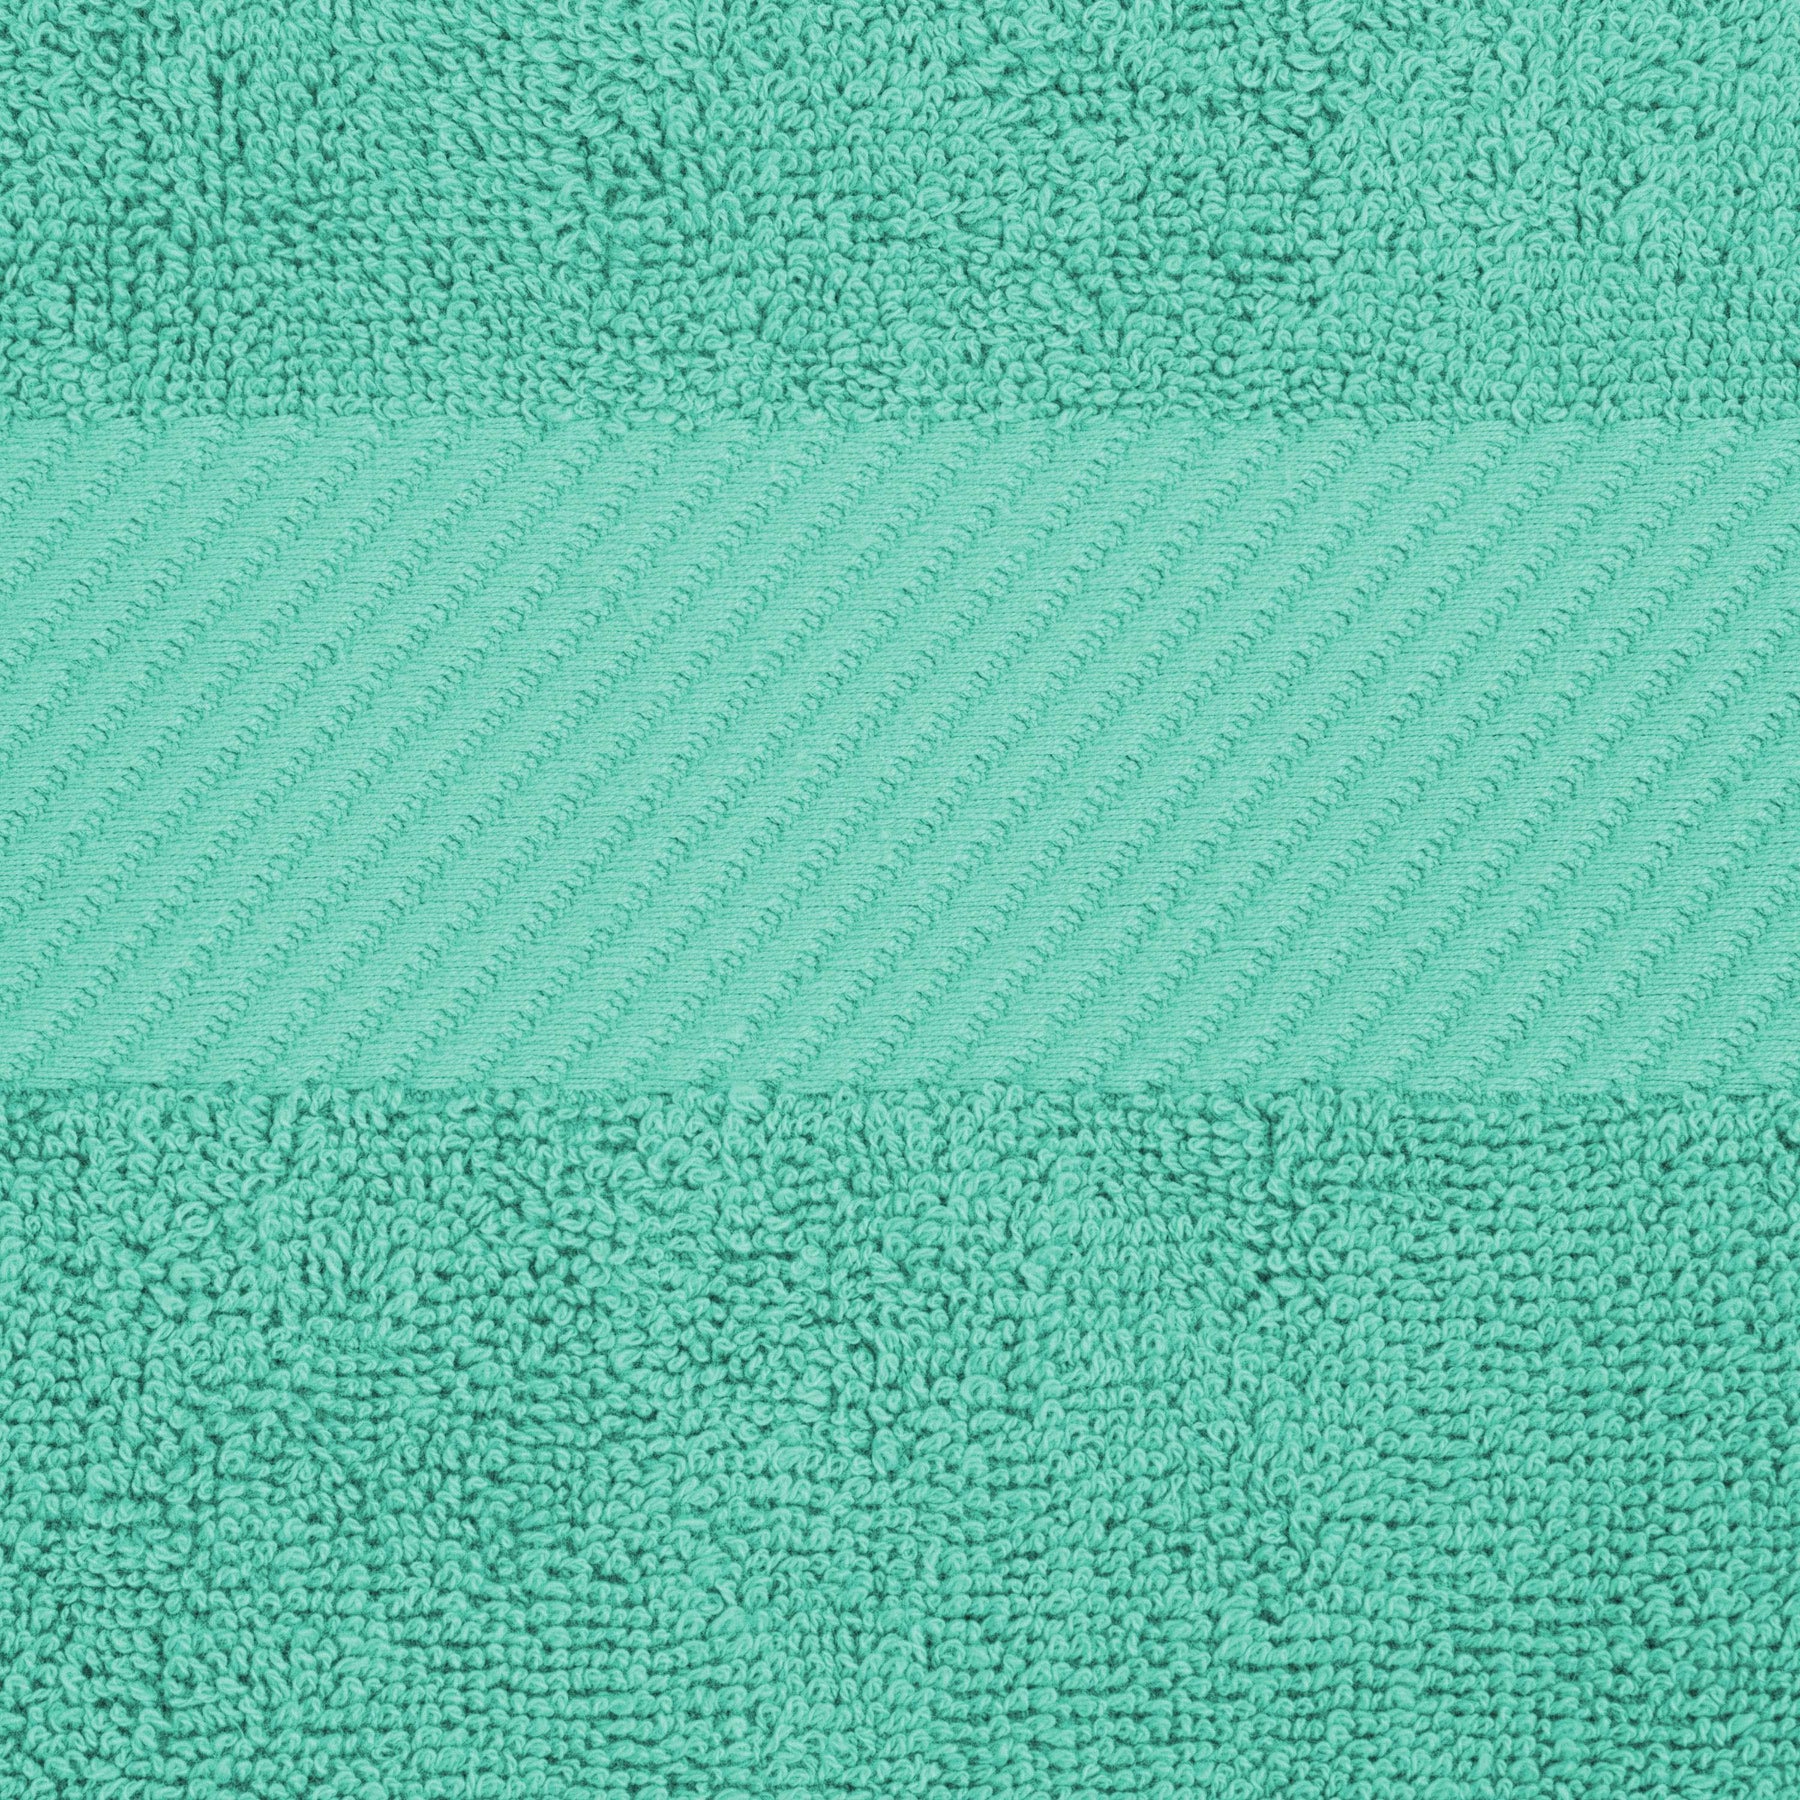 Egyptian Cotton Dobby Border Medium Weight 6 Piece Towel Set - Towel Set by Superior - Superior 